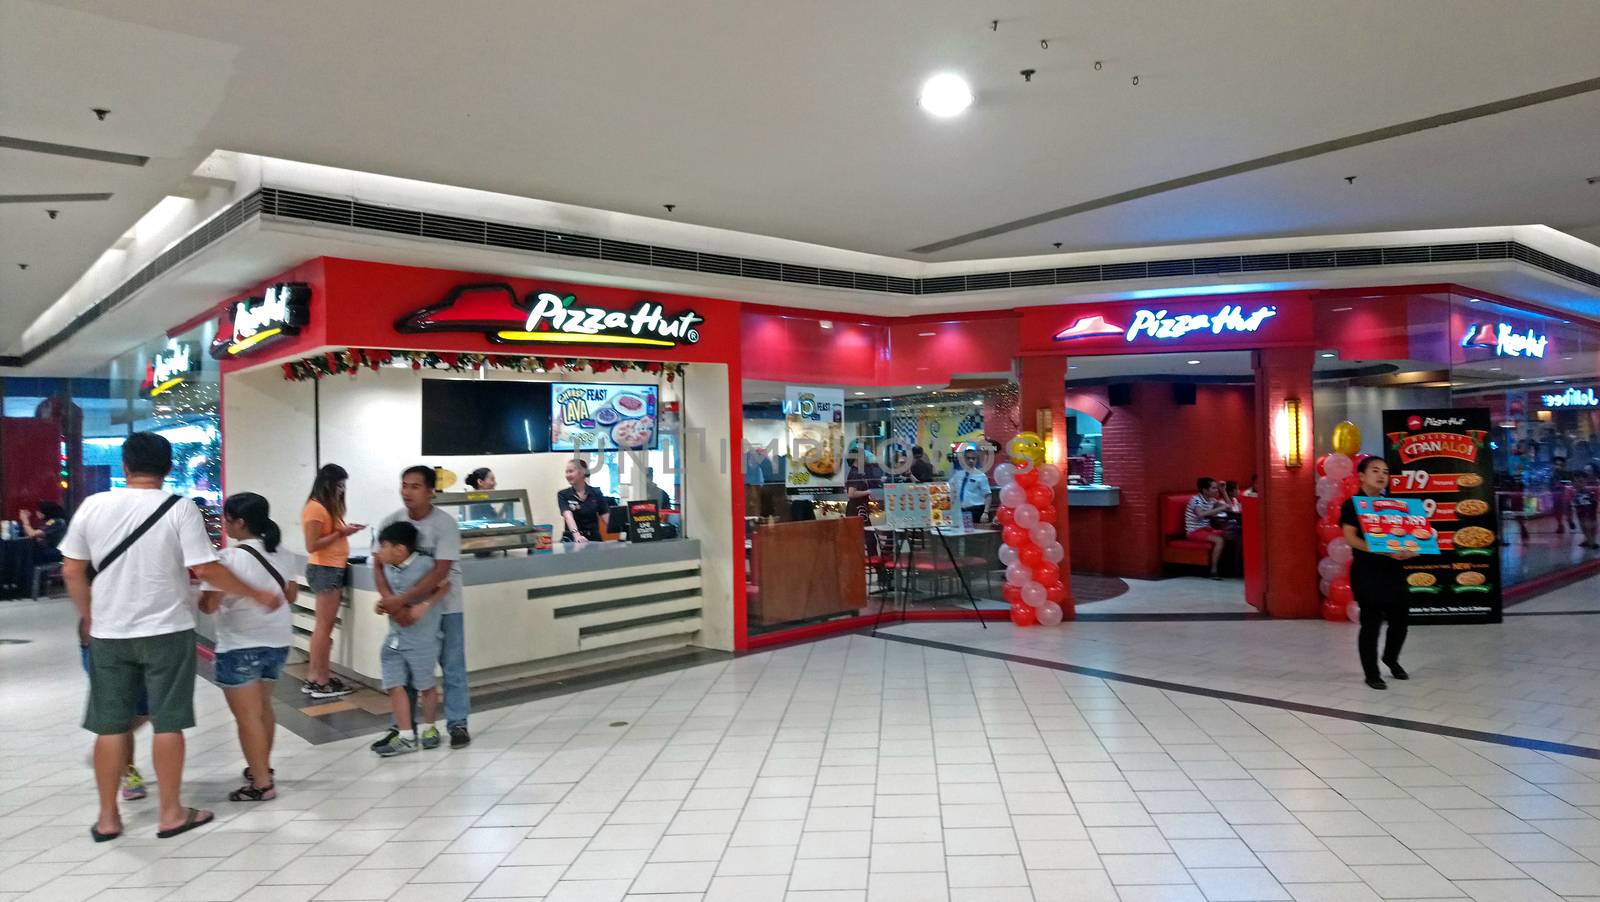 QUEZON CITY - JAN 3 - Pizza hut facade at SM Santa Mesa on January 3, 2017 in Quezon City, Philippines.